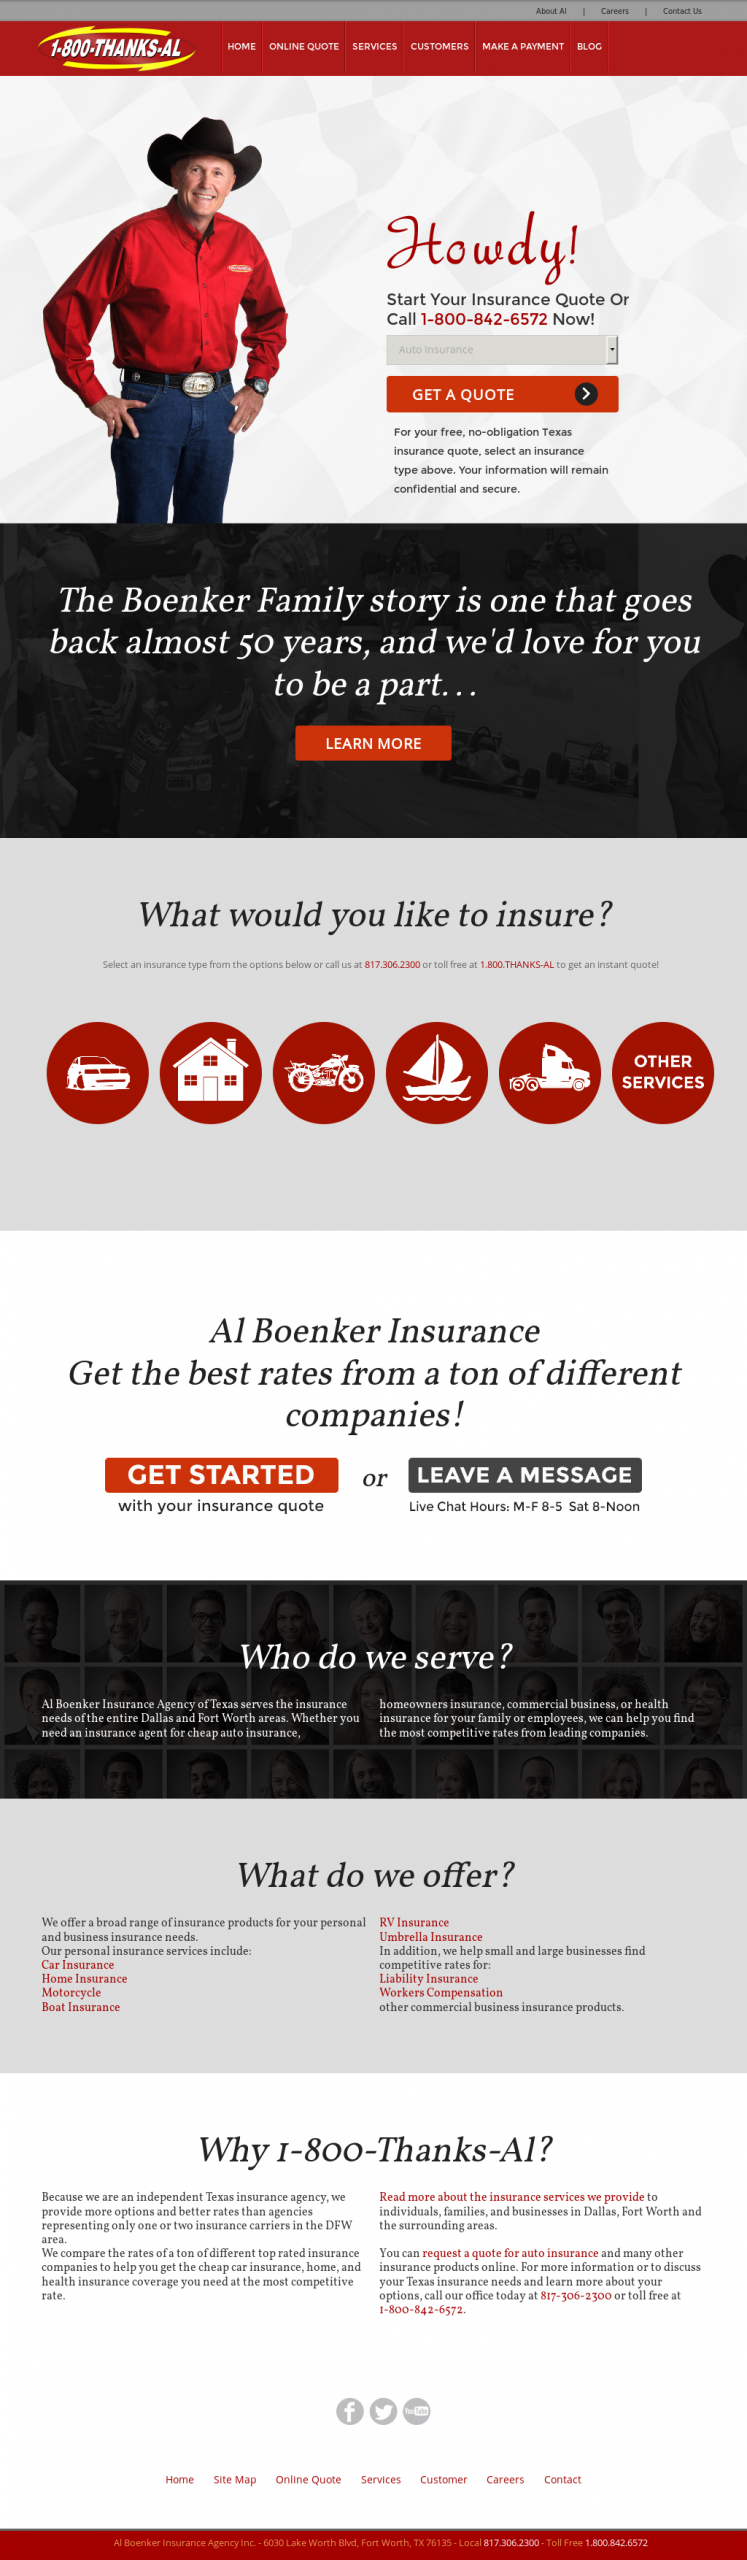 Al Boenker Insurance Competitors Revenue And Employees inside size 1024 X 3507